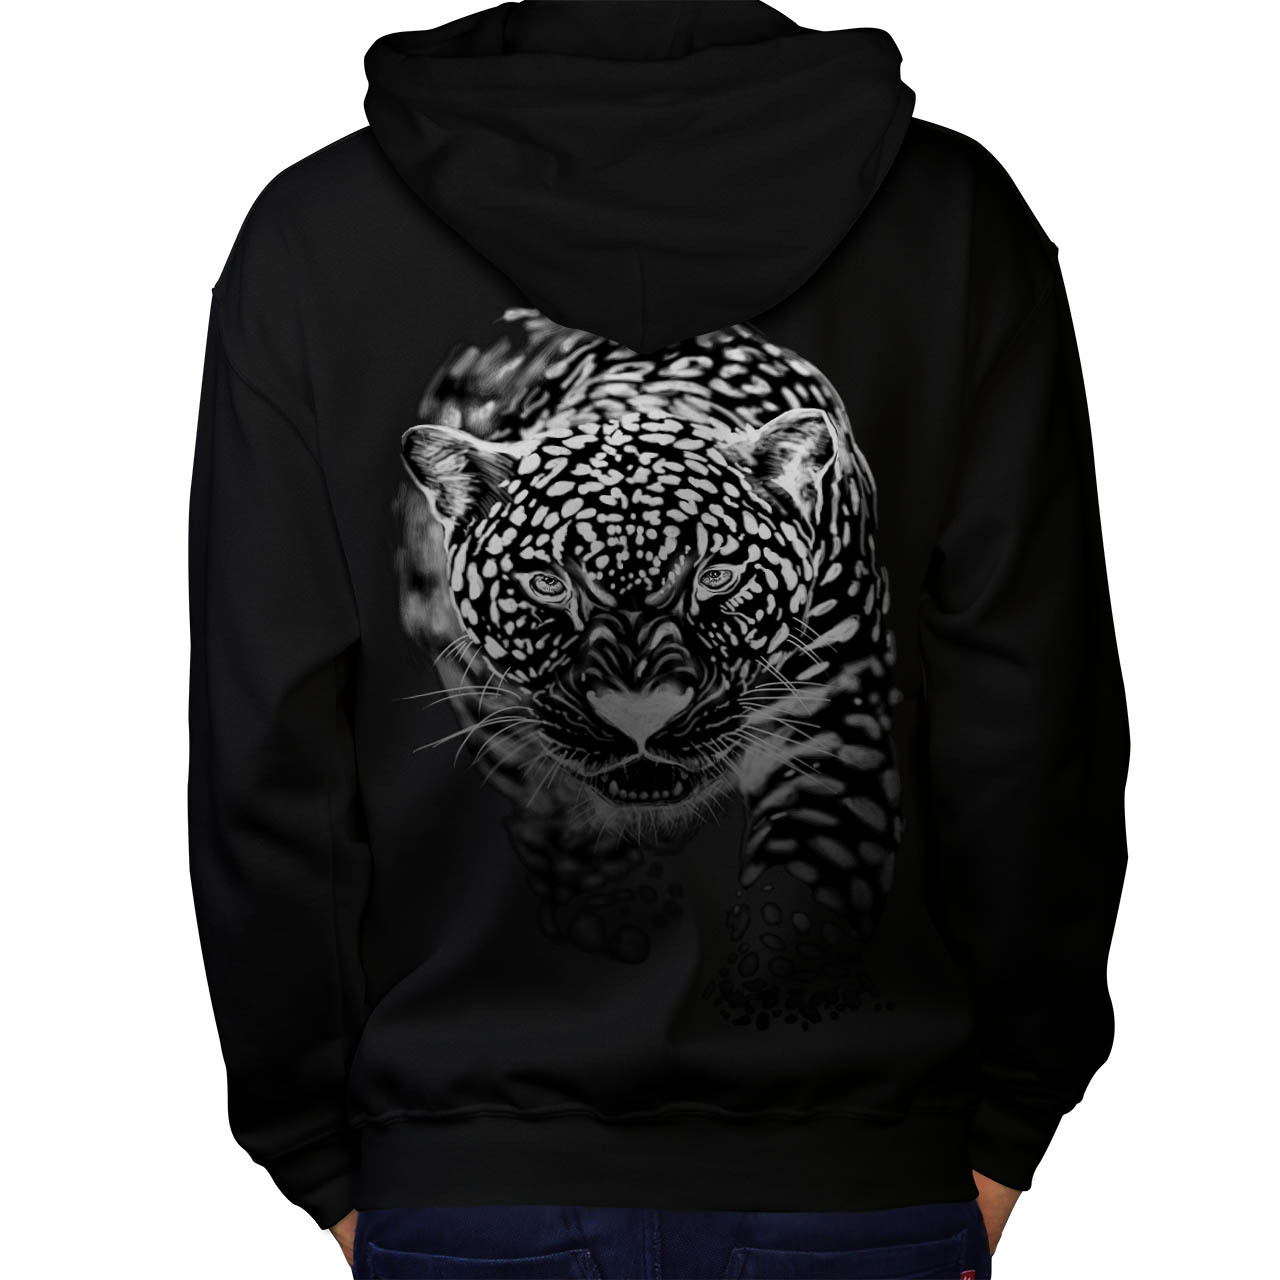 Cougar Puma Killer Sweatshirt Hoody Cat Hunting Men Hoodie Back - $20.99